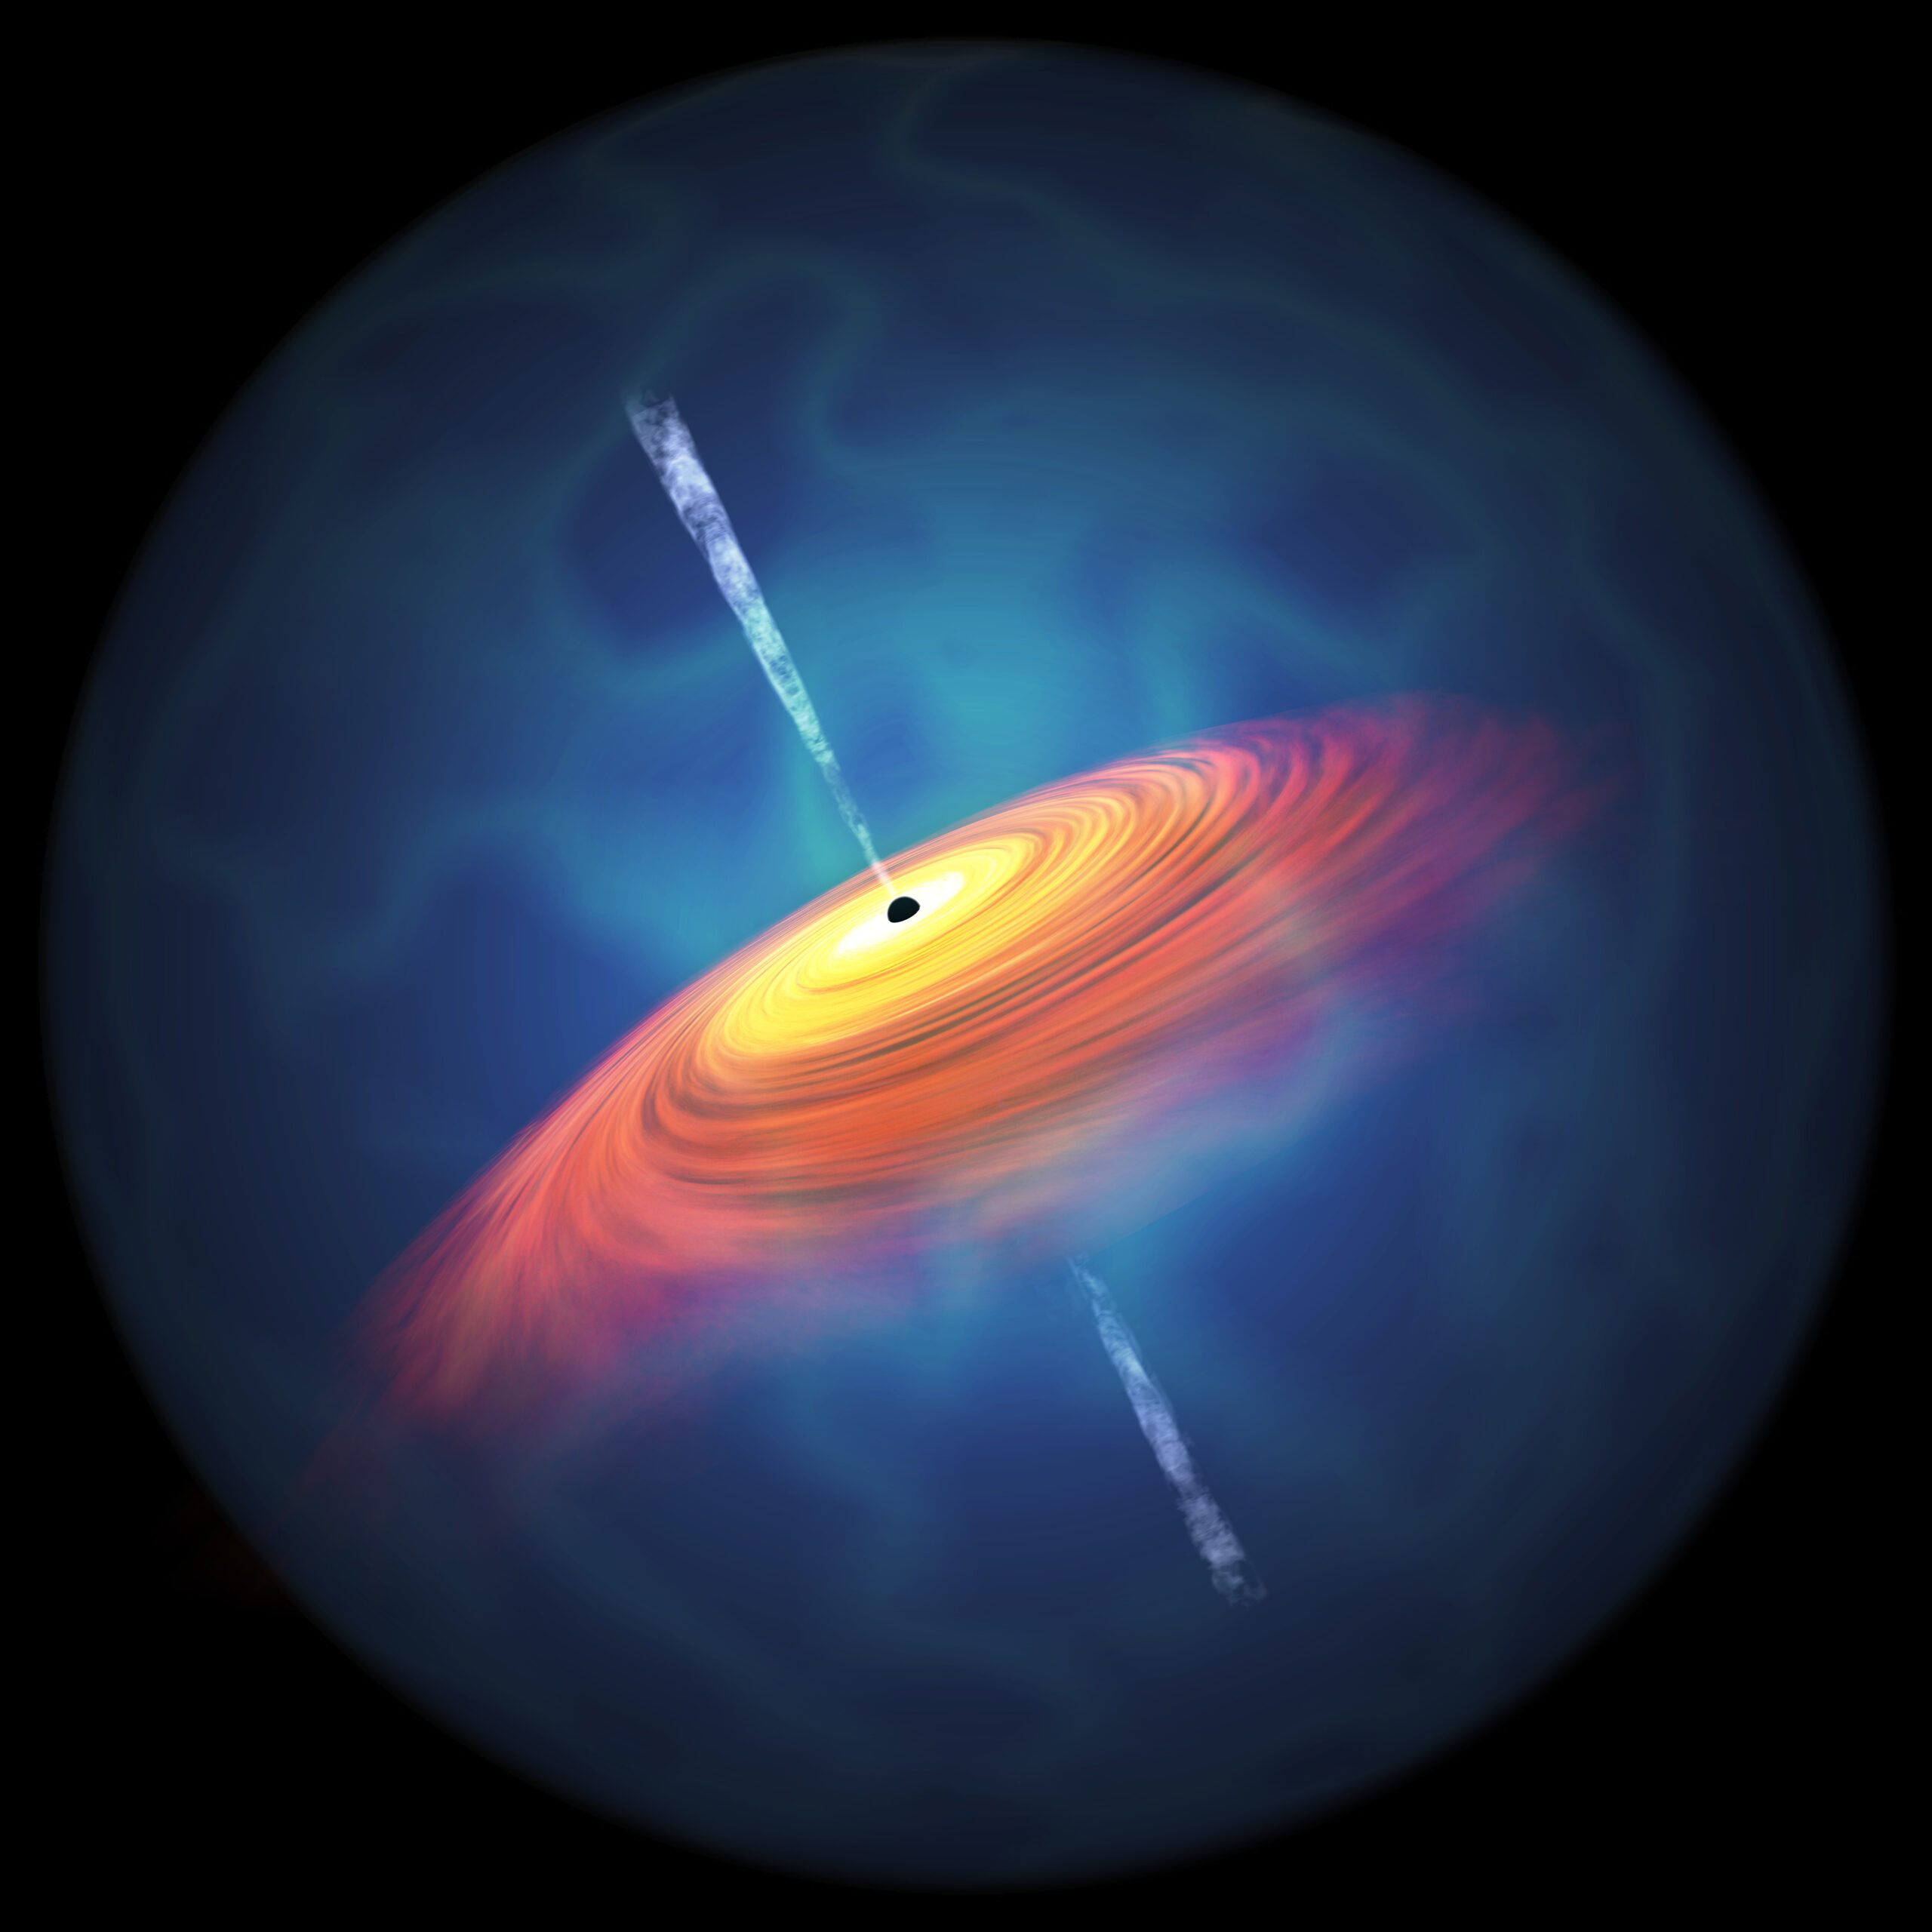 An artist’s impression of a quasar